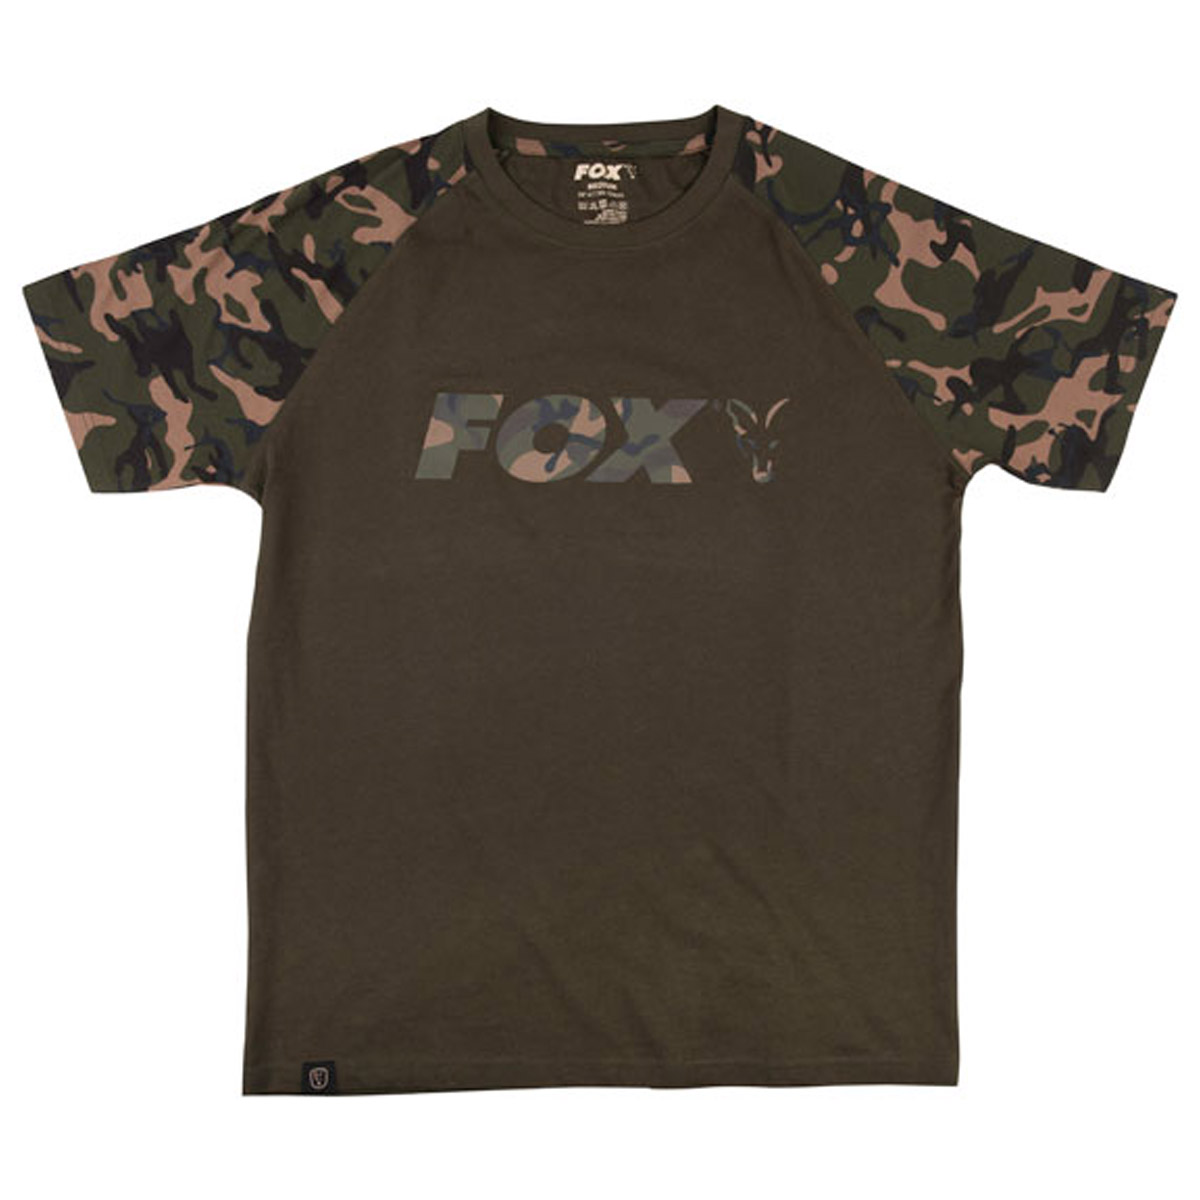 Fox Camo / Khaki Chest Print T-Shirt -  L -  XL -  XXL -  XXXL -  S -  M